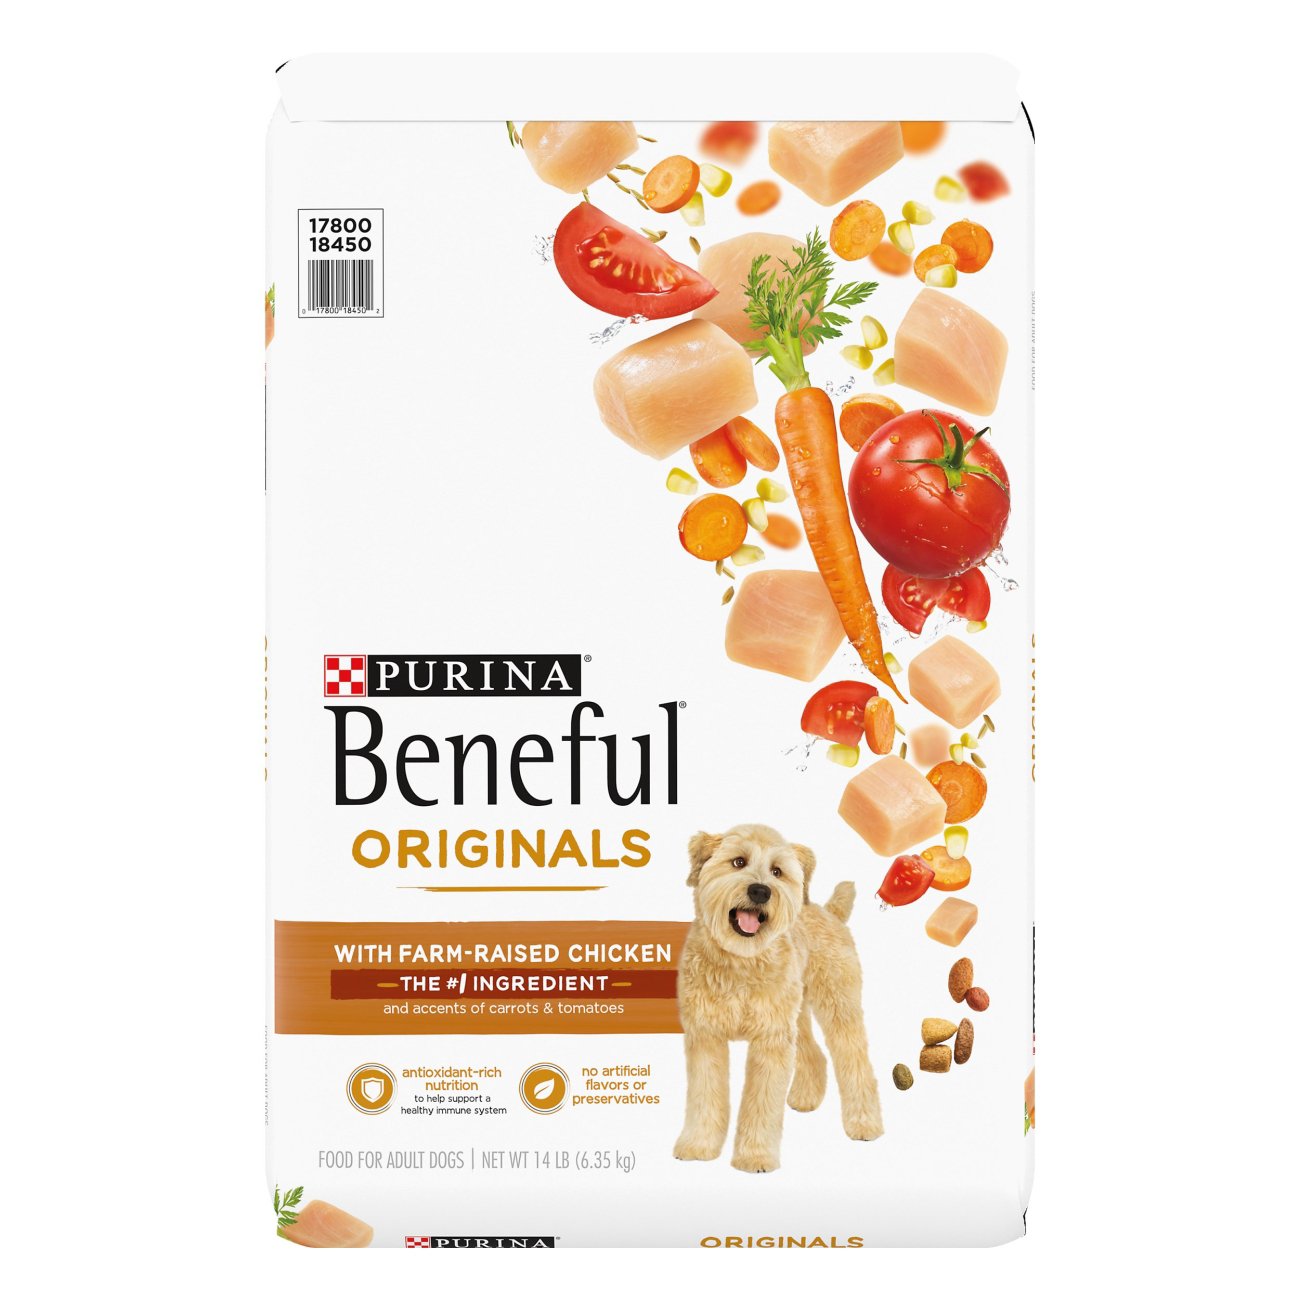 purina beneful small dog food